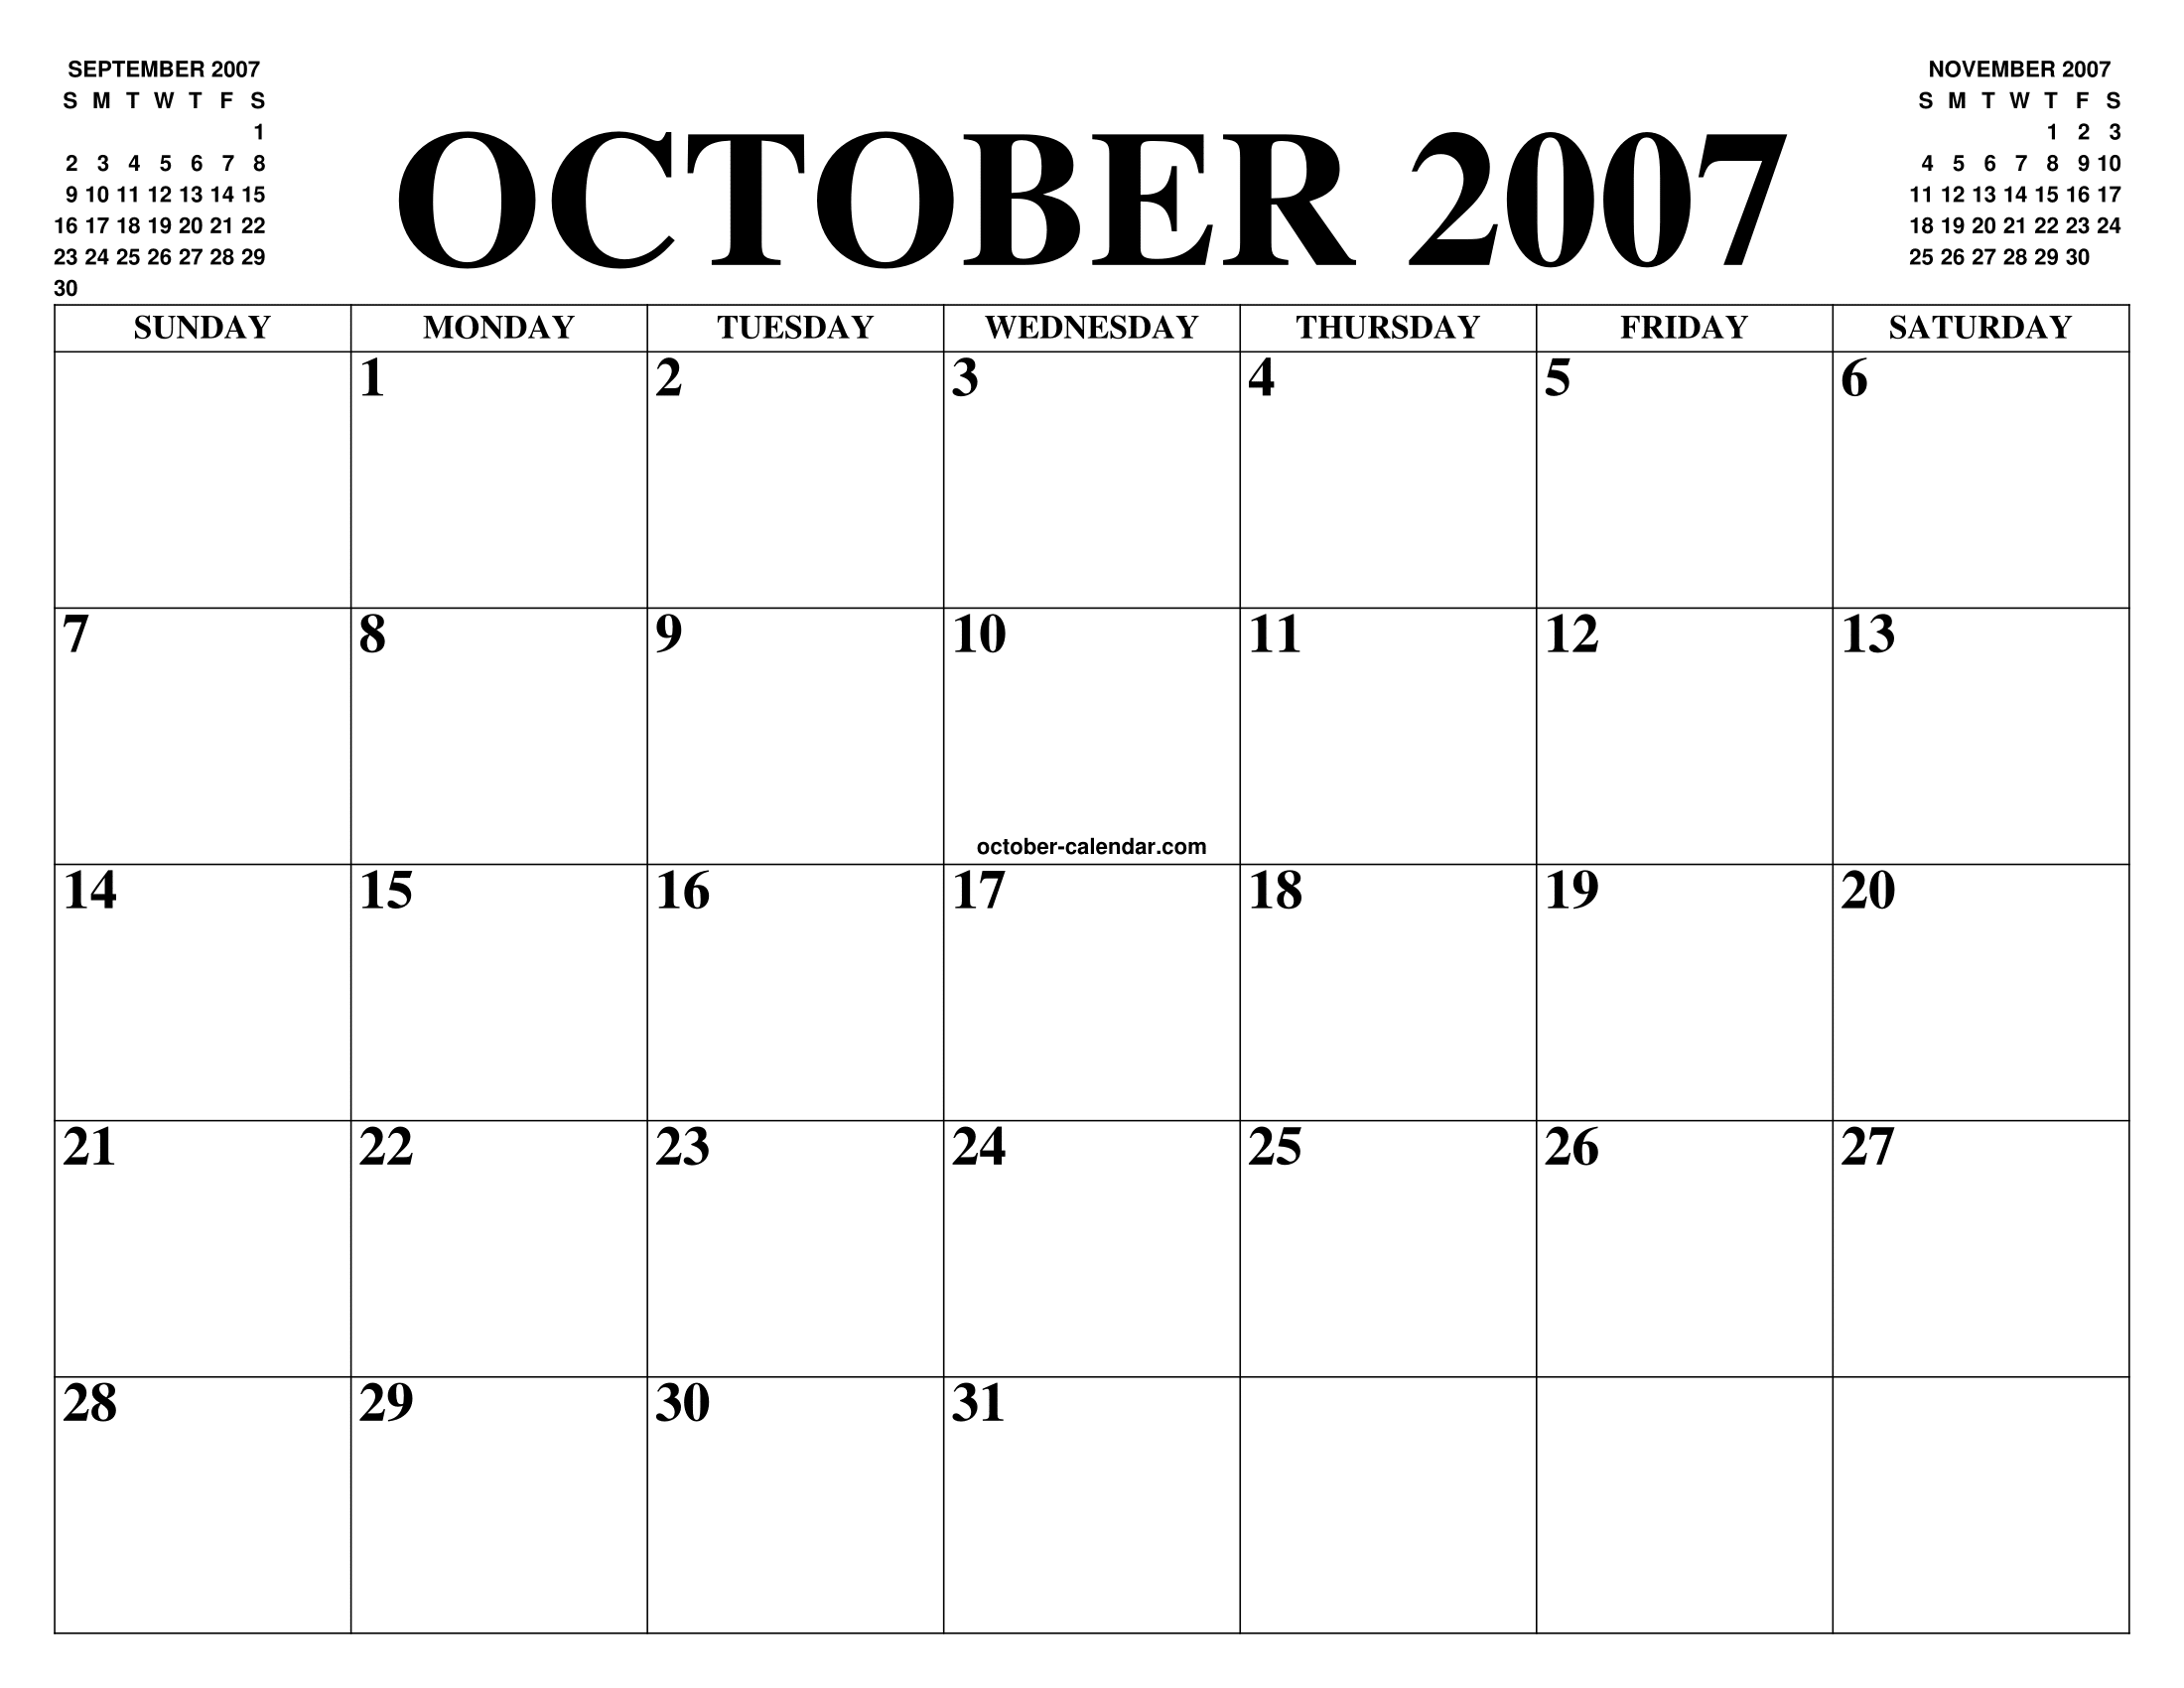 OCTOBER 2007 CALENDAR OF THE MONTH: FREE PRINTABLE OCTOBER CALENDAR OF